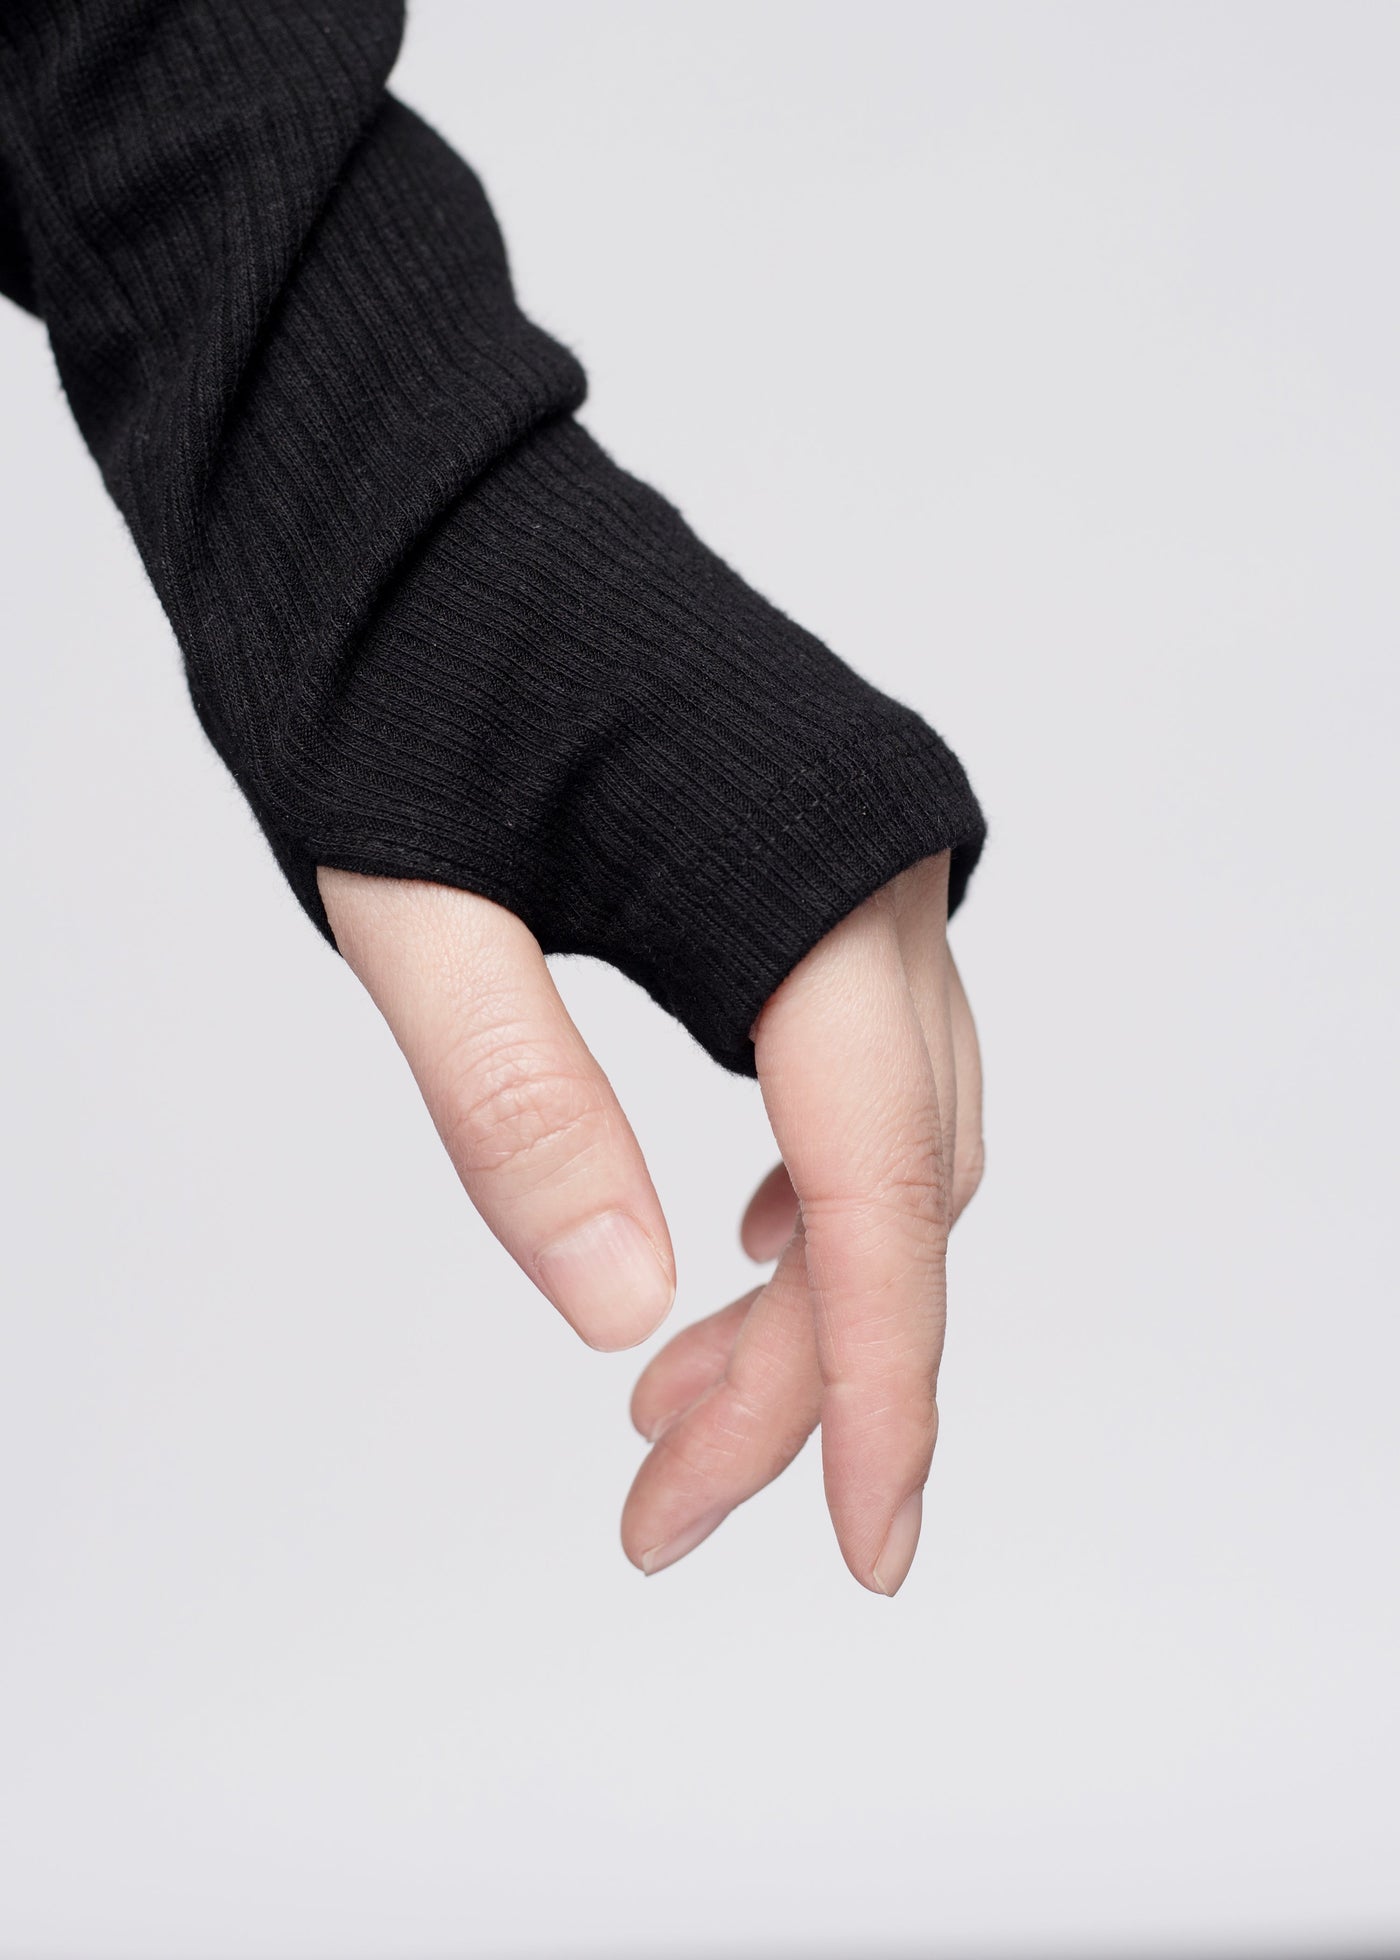 Women's Cold Shoulder Ribbed Knit Top In Black by Shop at Konus